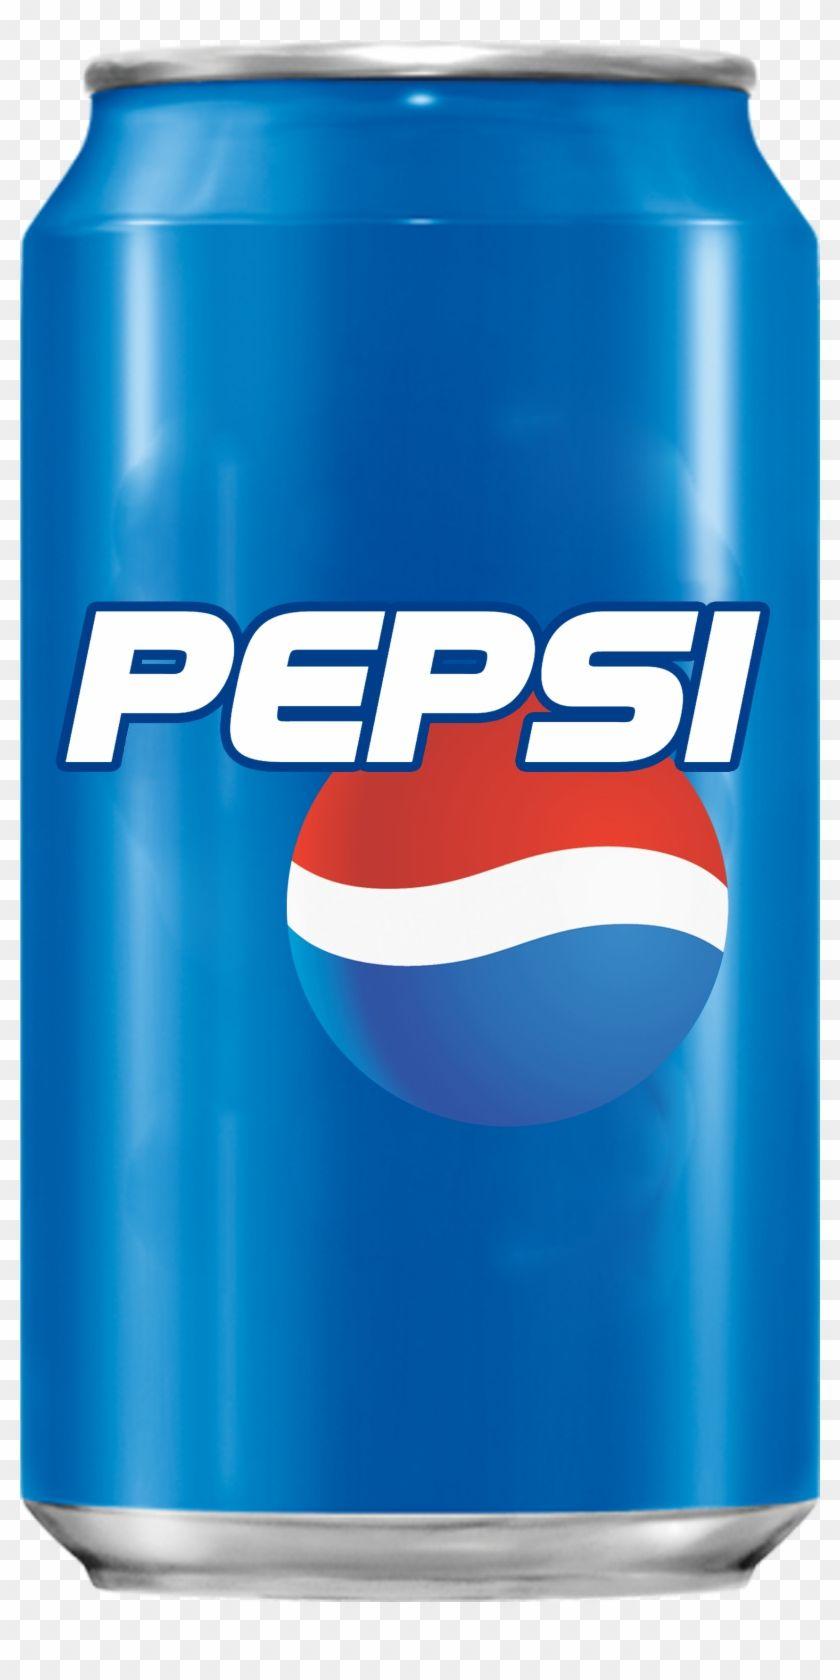 Pepsi Can Logo - Pepsi Can Clipart - Pepsi-cola Soda 12-12 Fl. Oz. Cans - Free ...